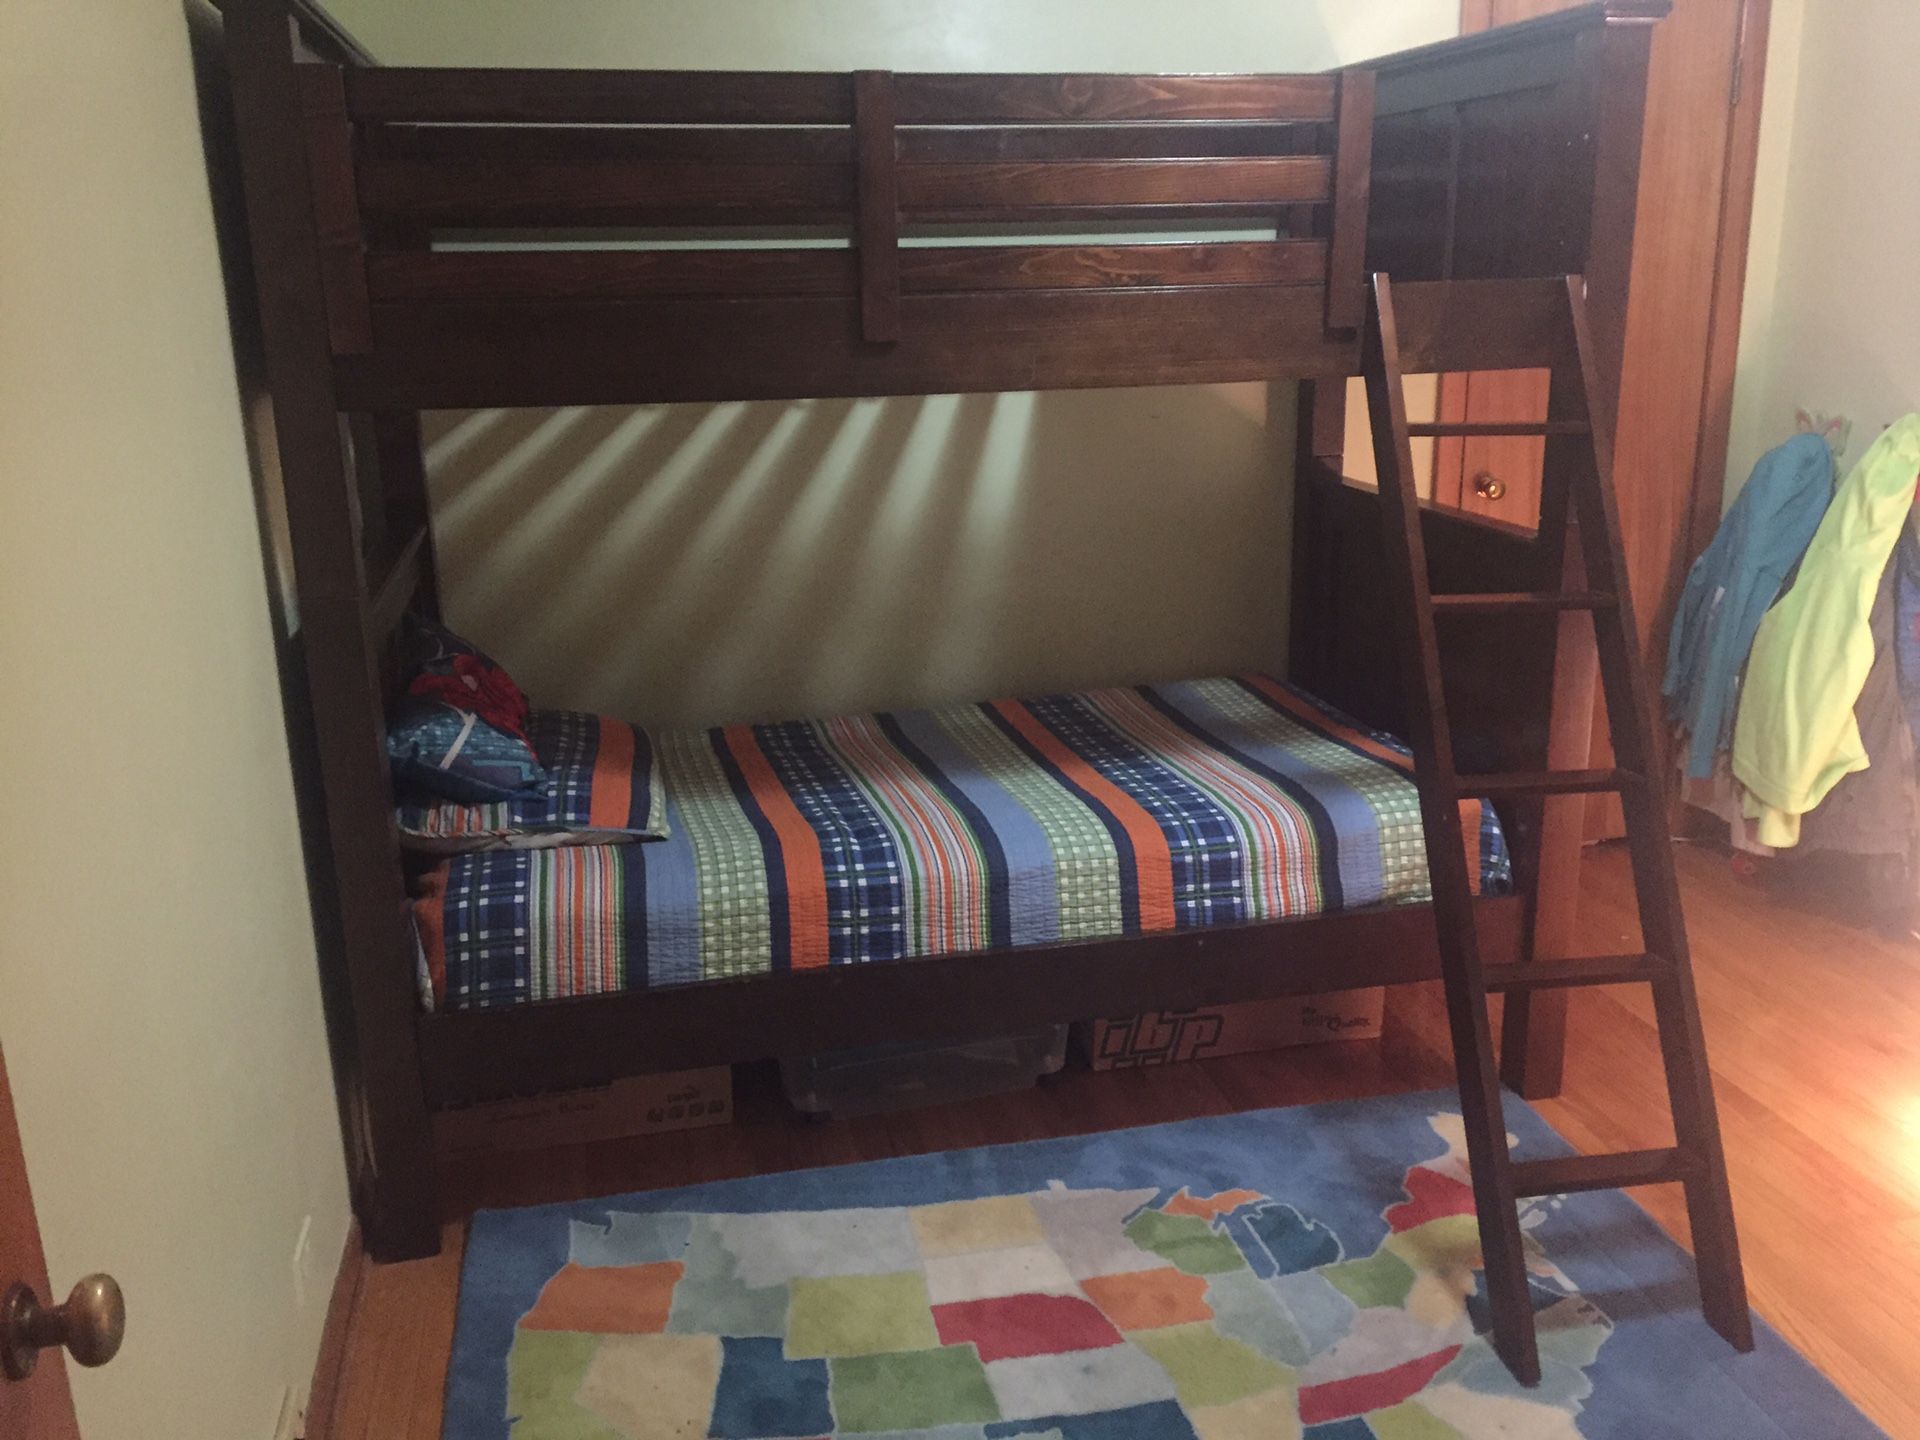 Land of nod bunk bed